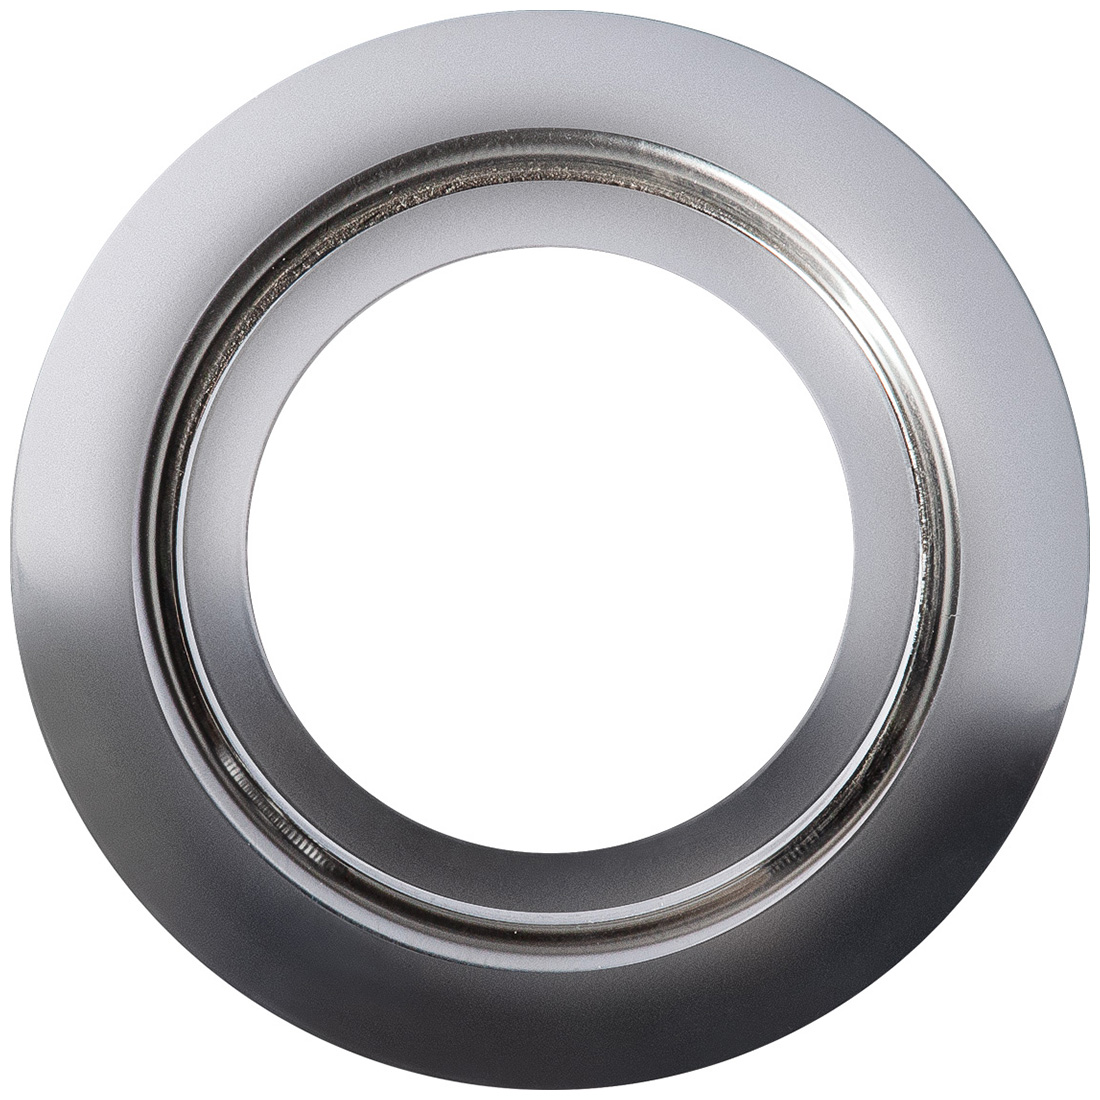 Кольцо переходник для измельчителя Bort Ring 160, 93412642 набор для монтажа моек ukinox 100x100x20 мм сталь